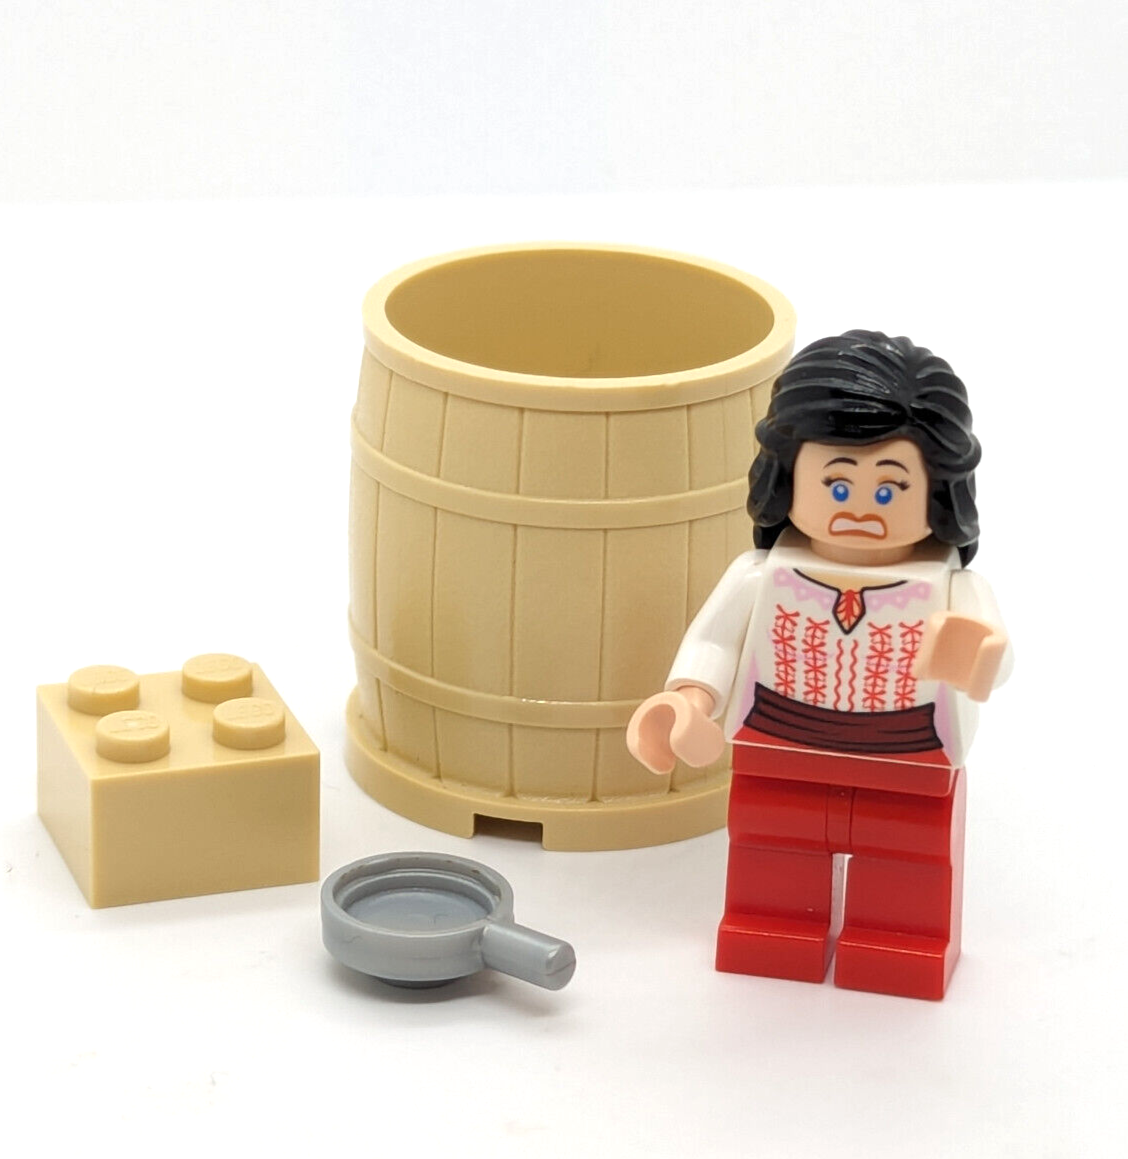 Lego Indiana Minifigure - Marion Ravenwood in Cairo Outfit (iaj036) 7195 Barrel